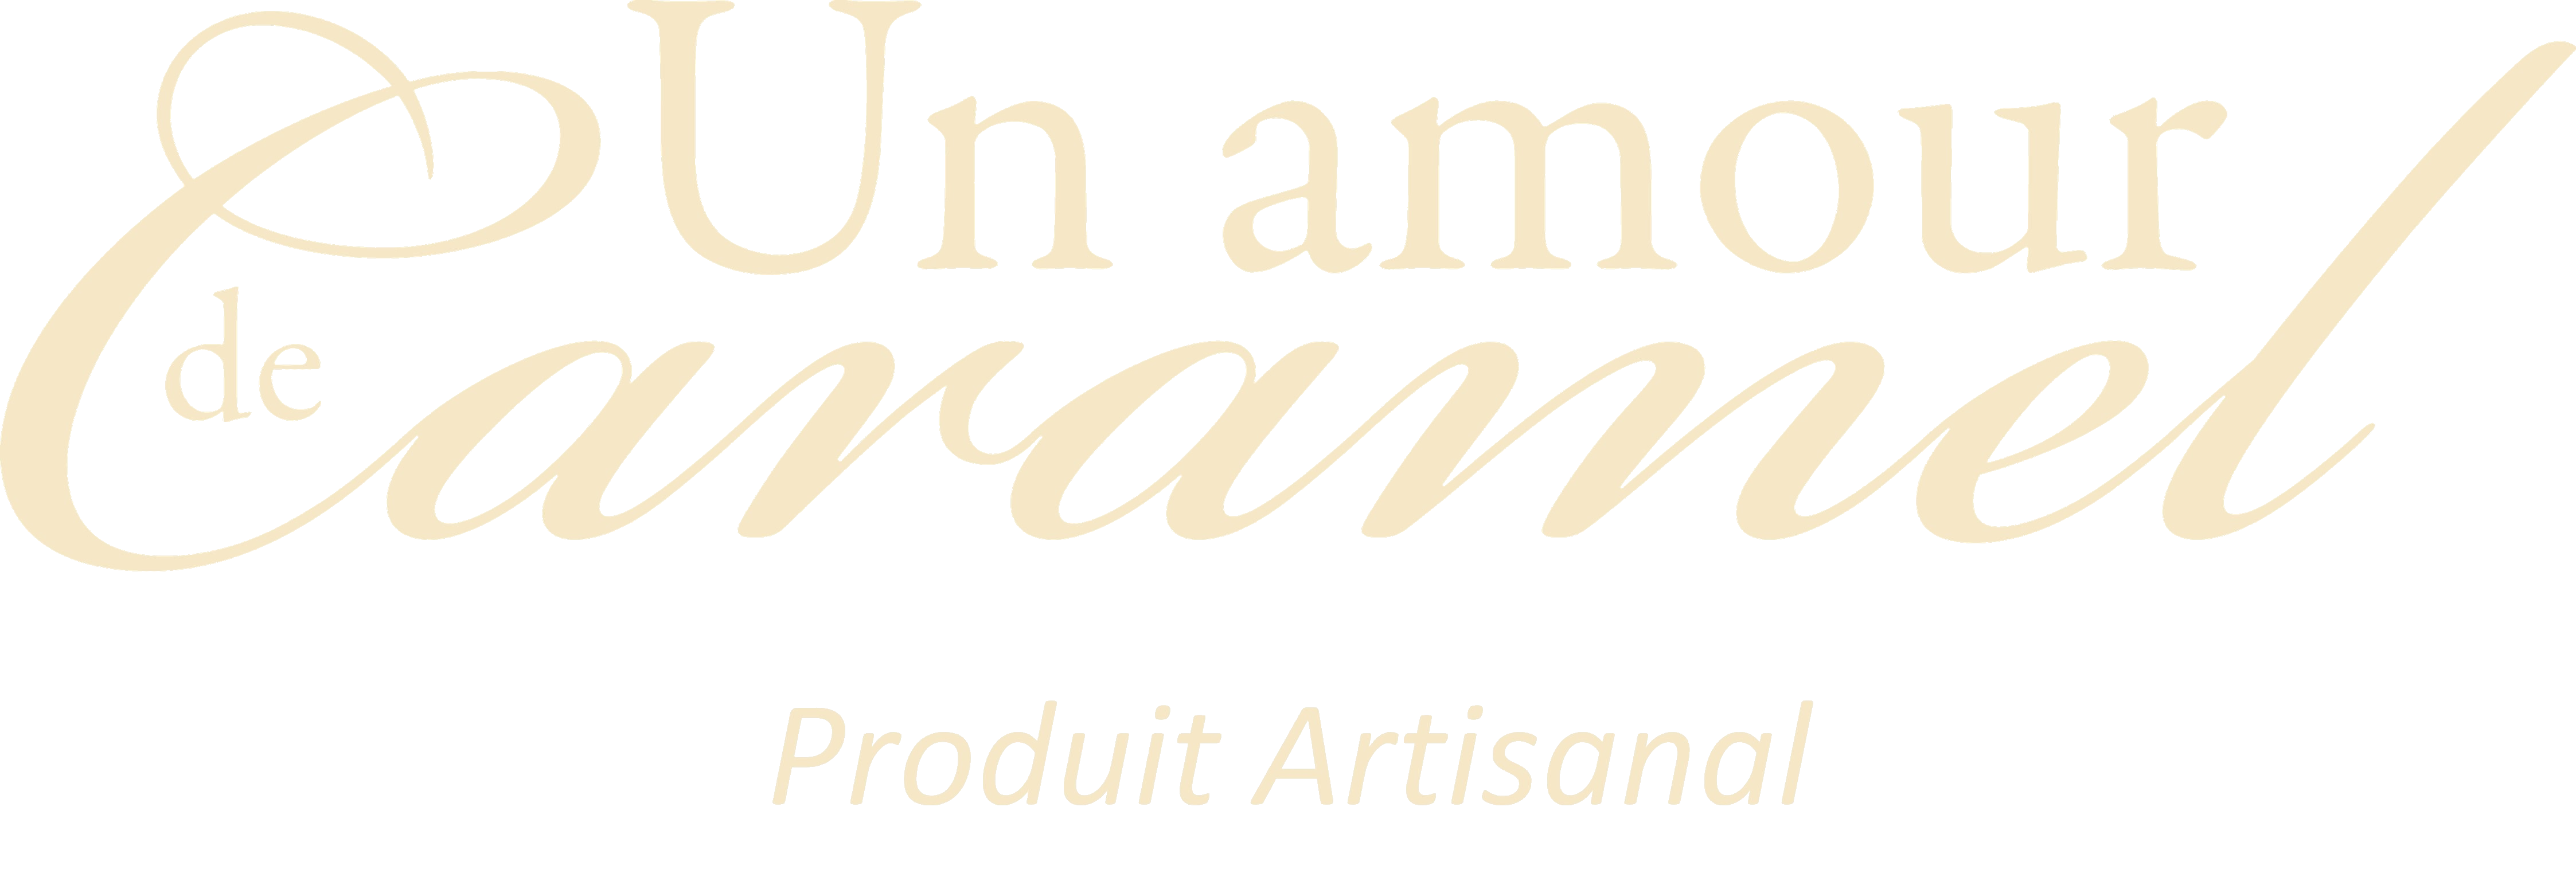 Logo Une Histoire de Caramel